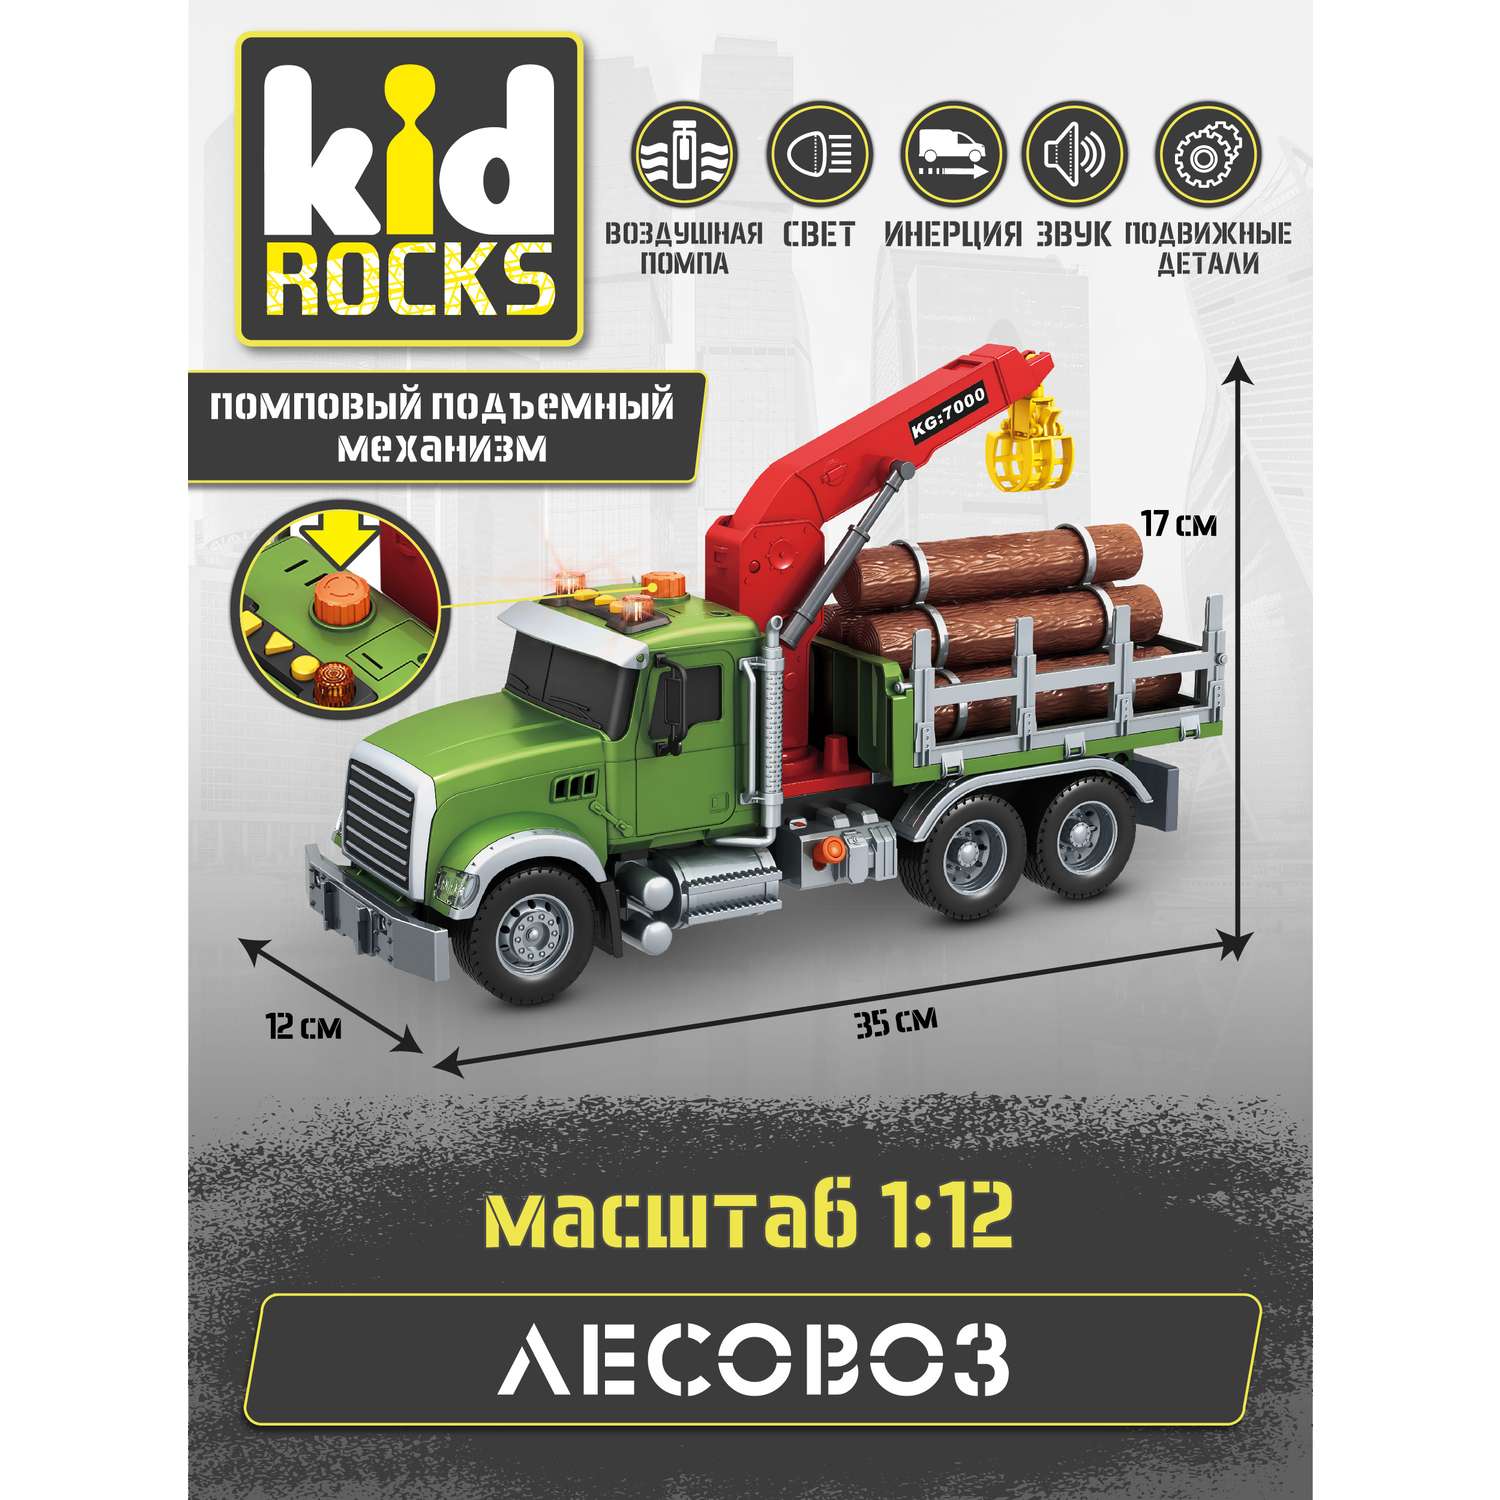 Модель Kid Rocks Лесовоз масштаб 1:12 со звуком и светом AB-2128 - фото 5